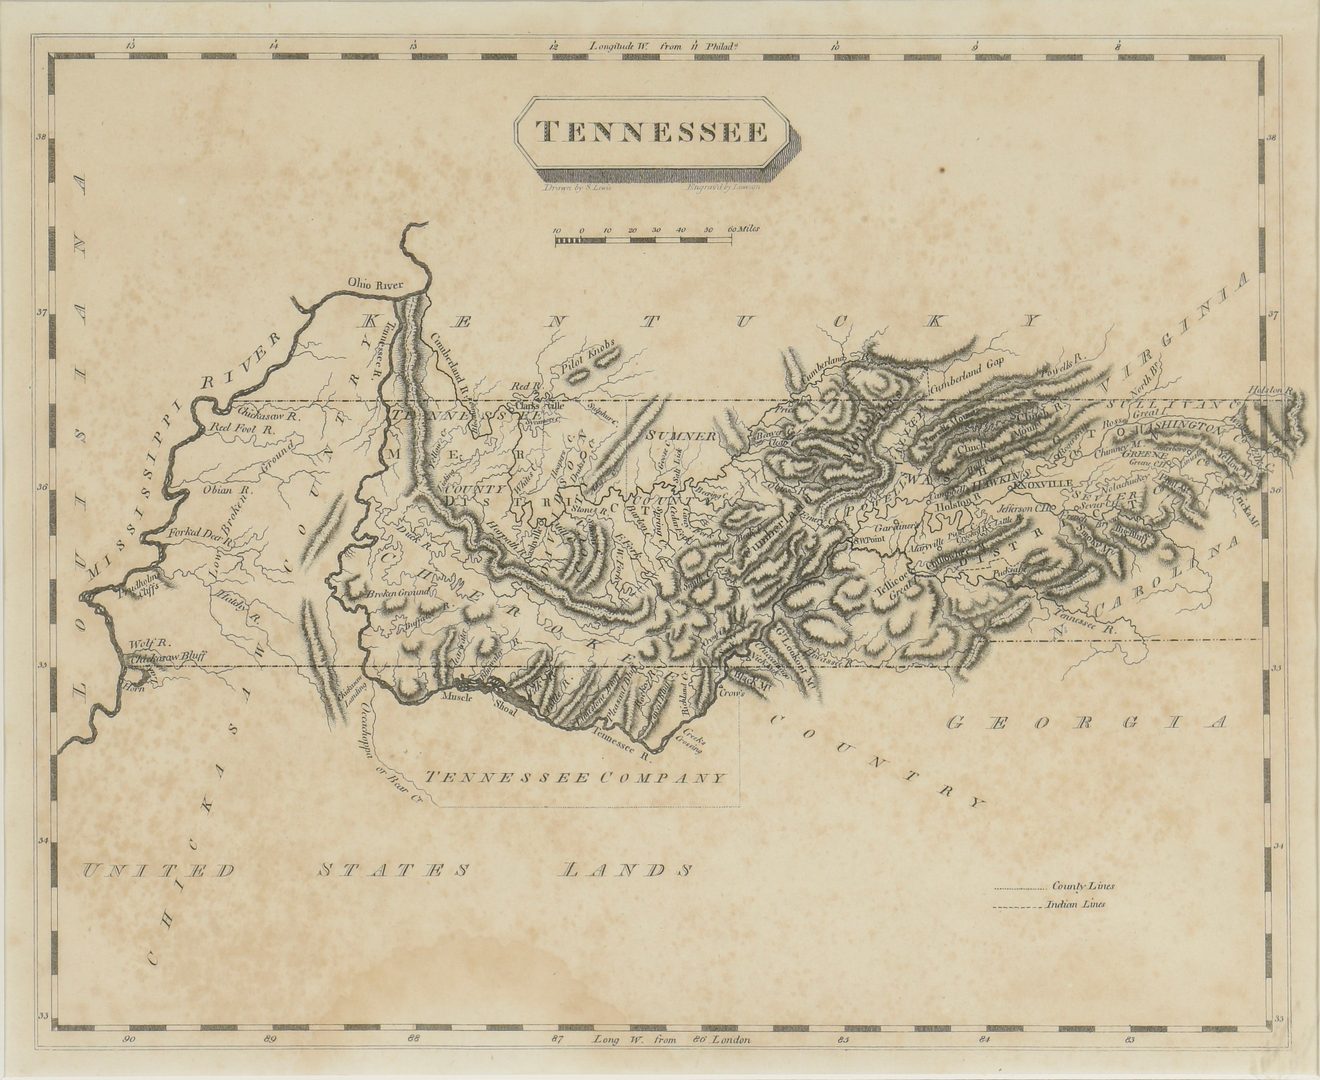 Lot 264: Tennessee Map, Samuel Lewis & Alexander Lawson, 1804